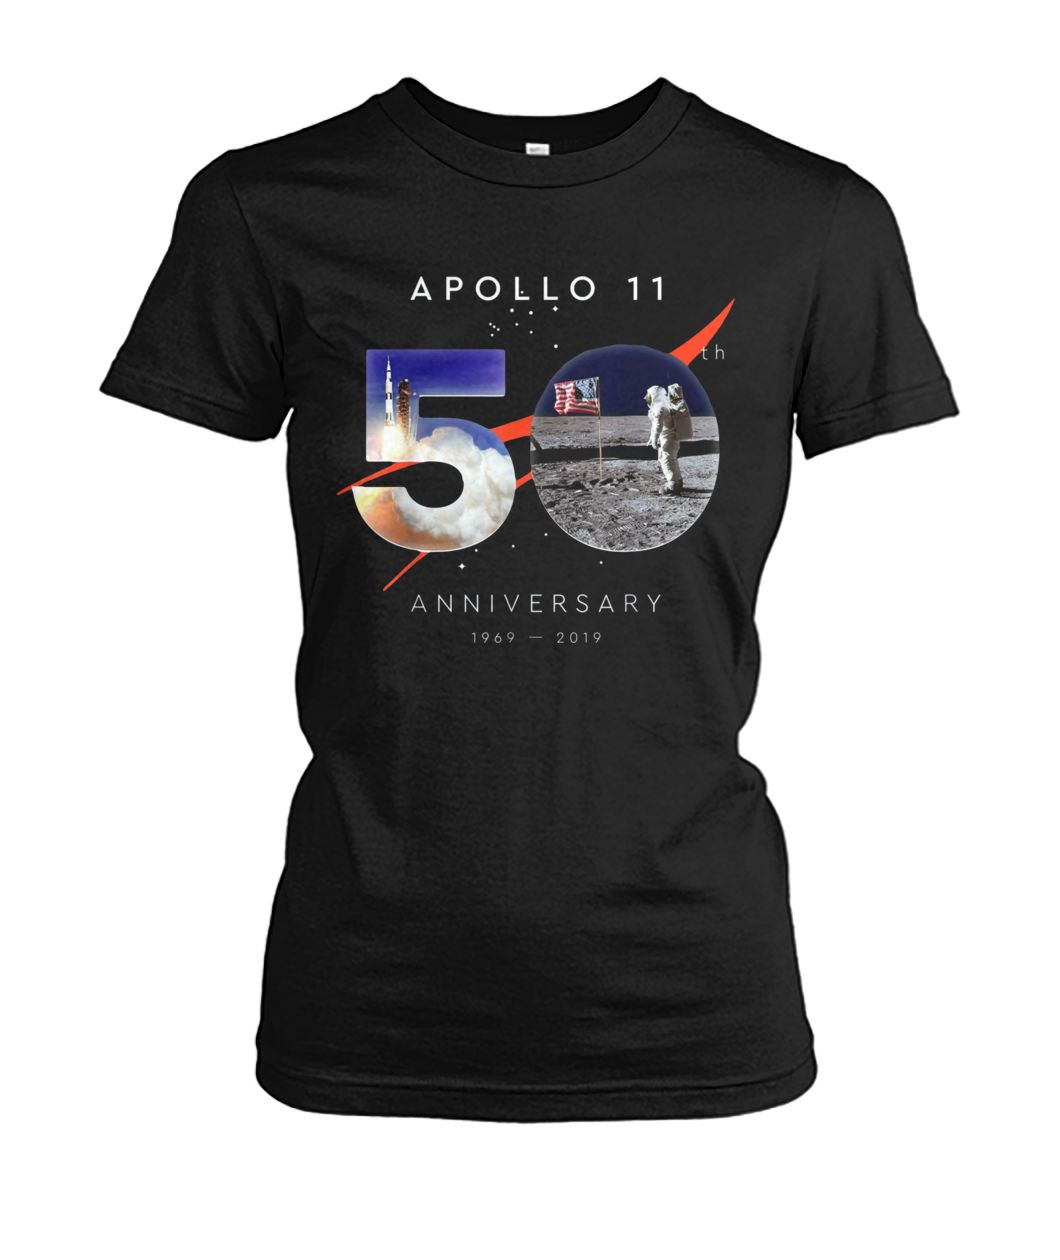 Apollo 11 50th anniversary moon landing 1969-2019 women's crew tee